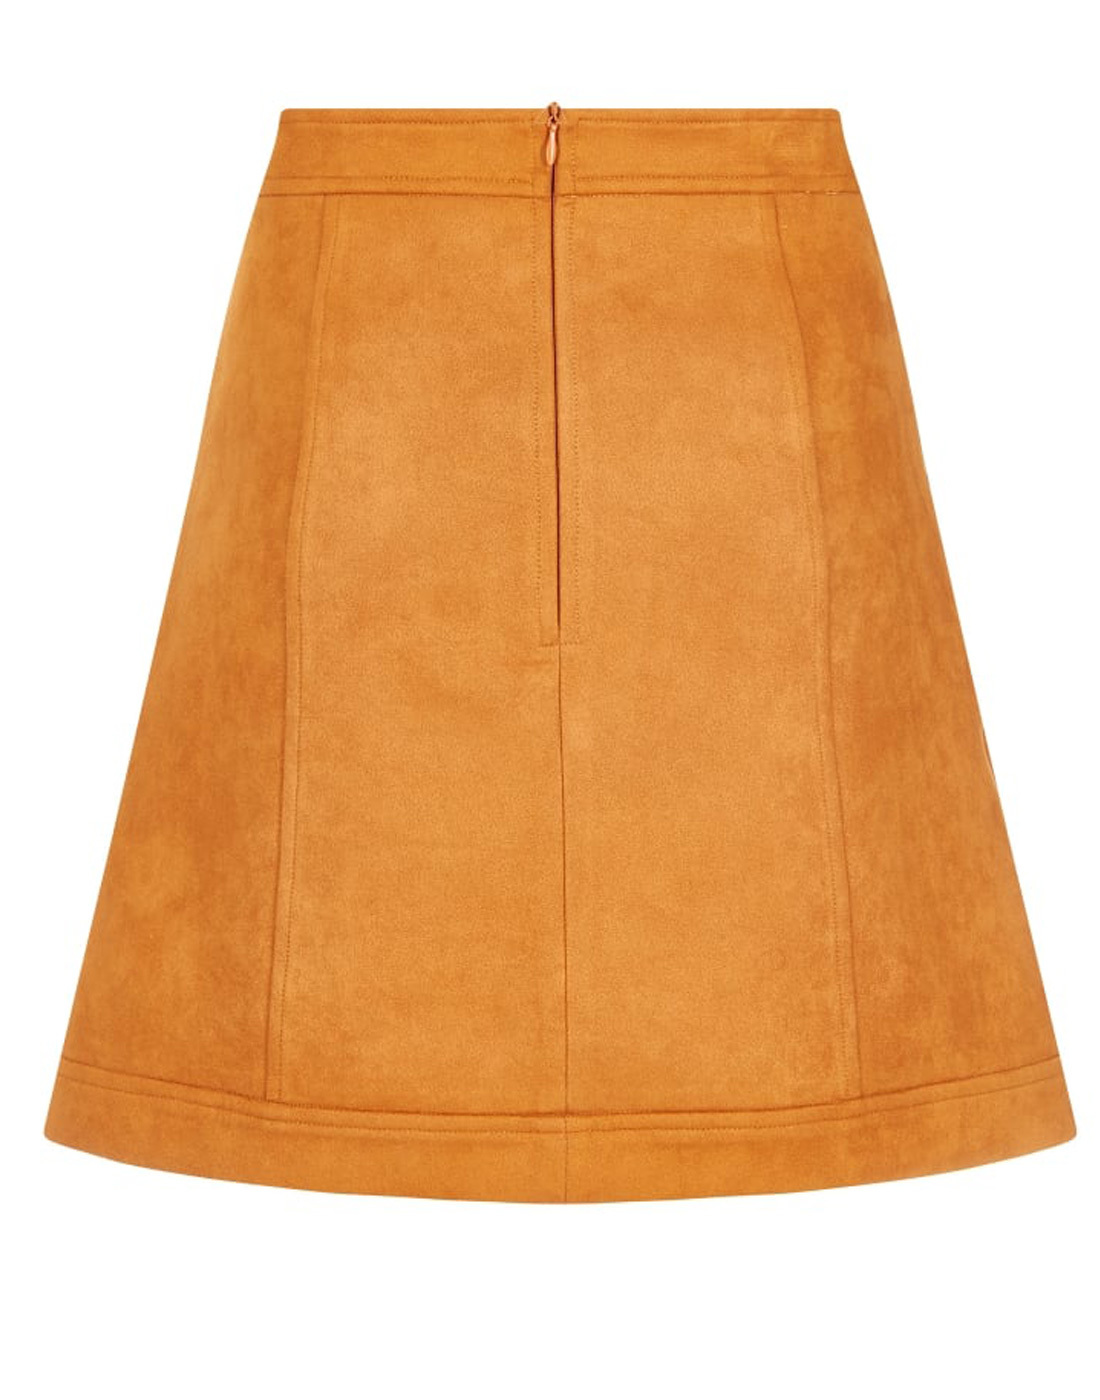 BRIGHT & BEAUTIFUL Lilca 1960s Mod Suedette Mini Skirt in Rust